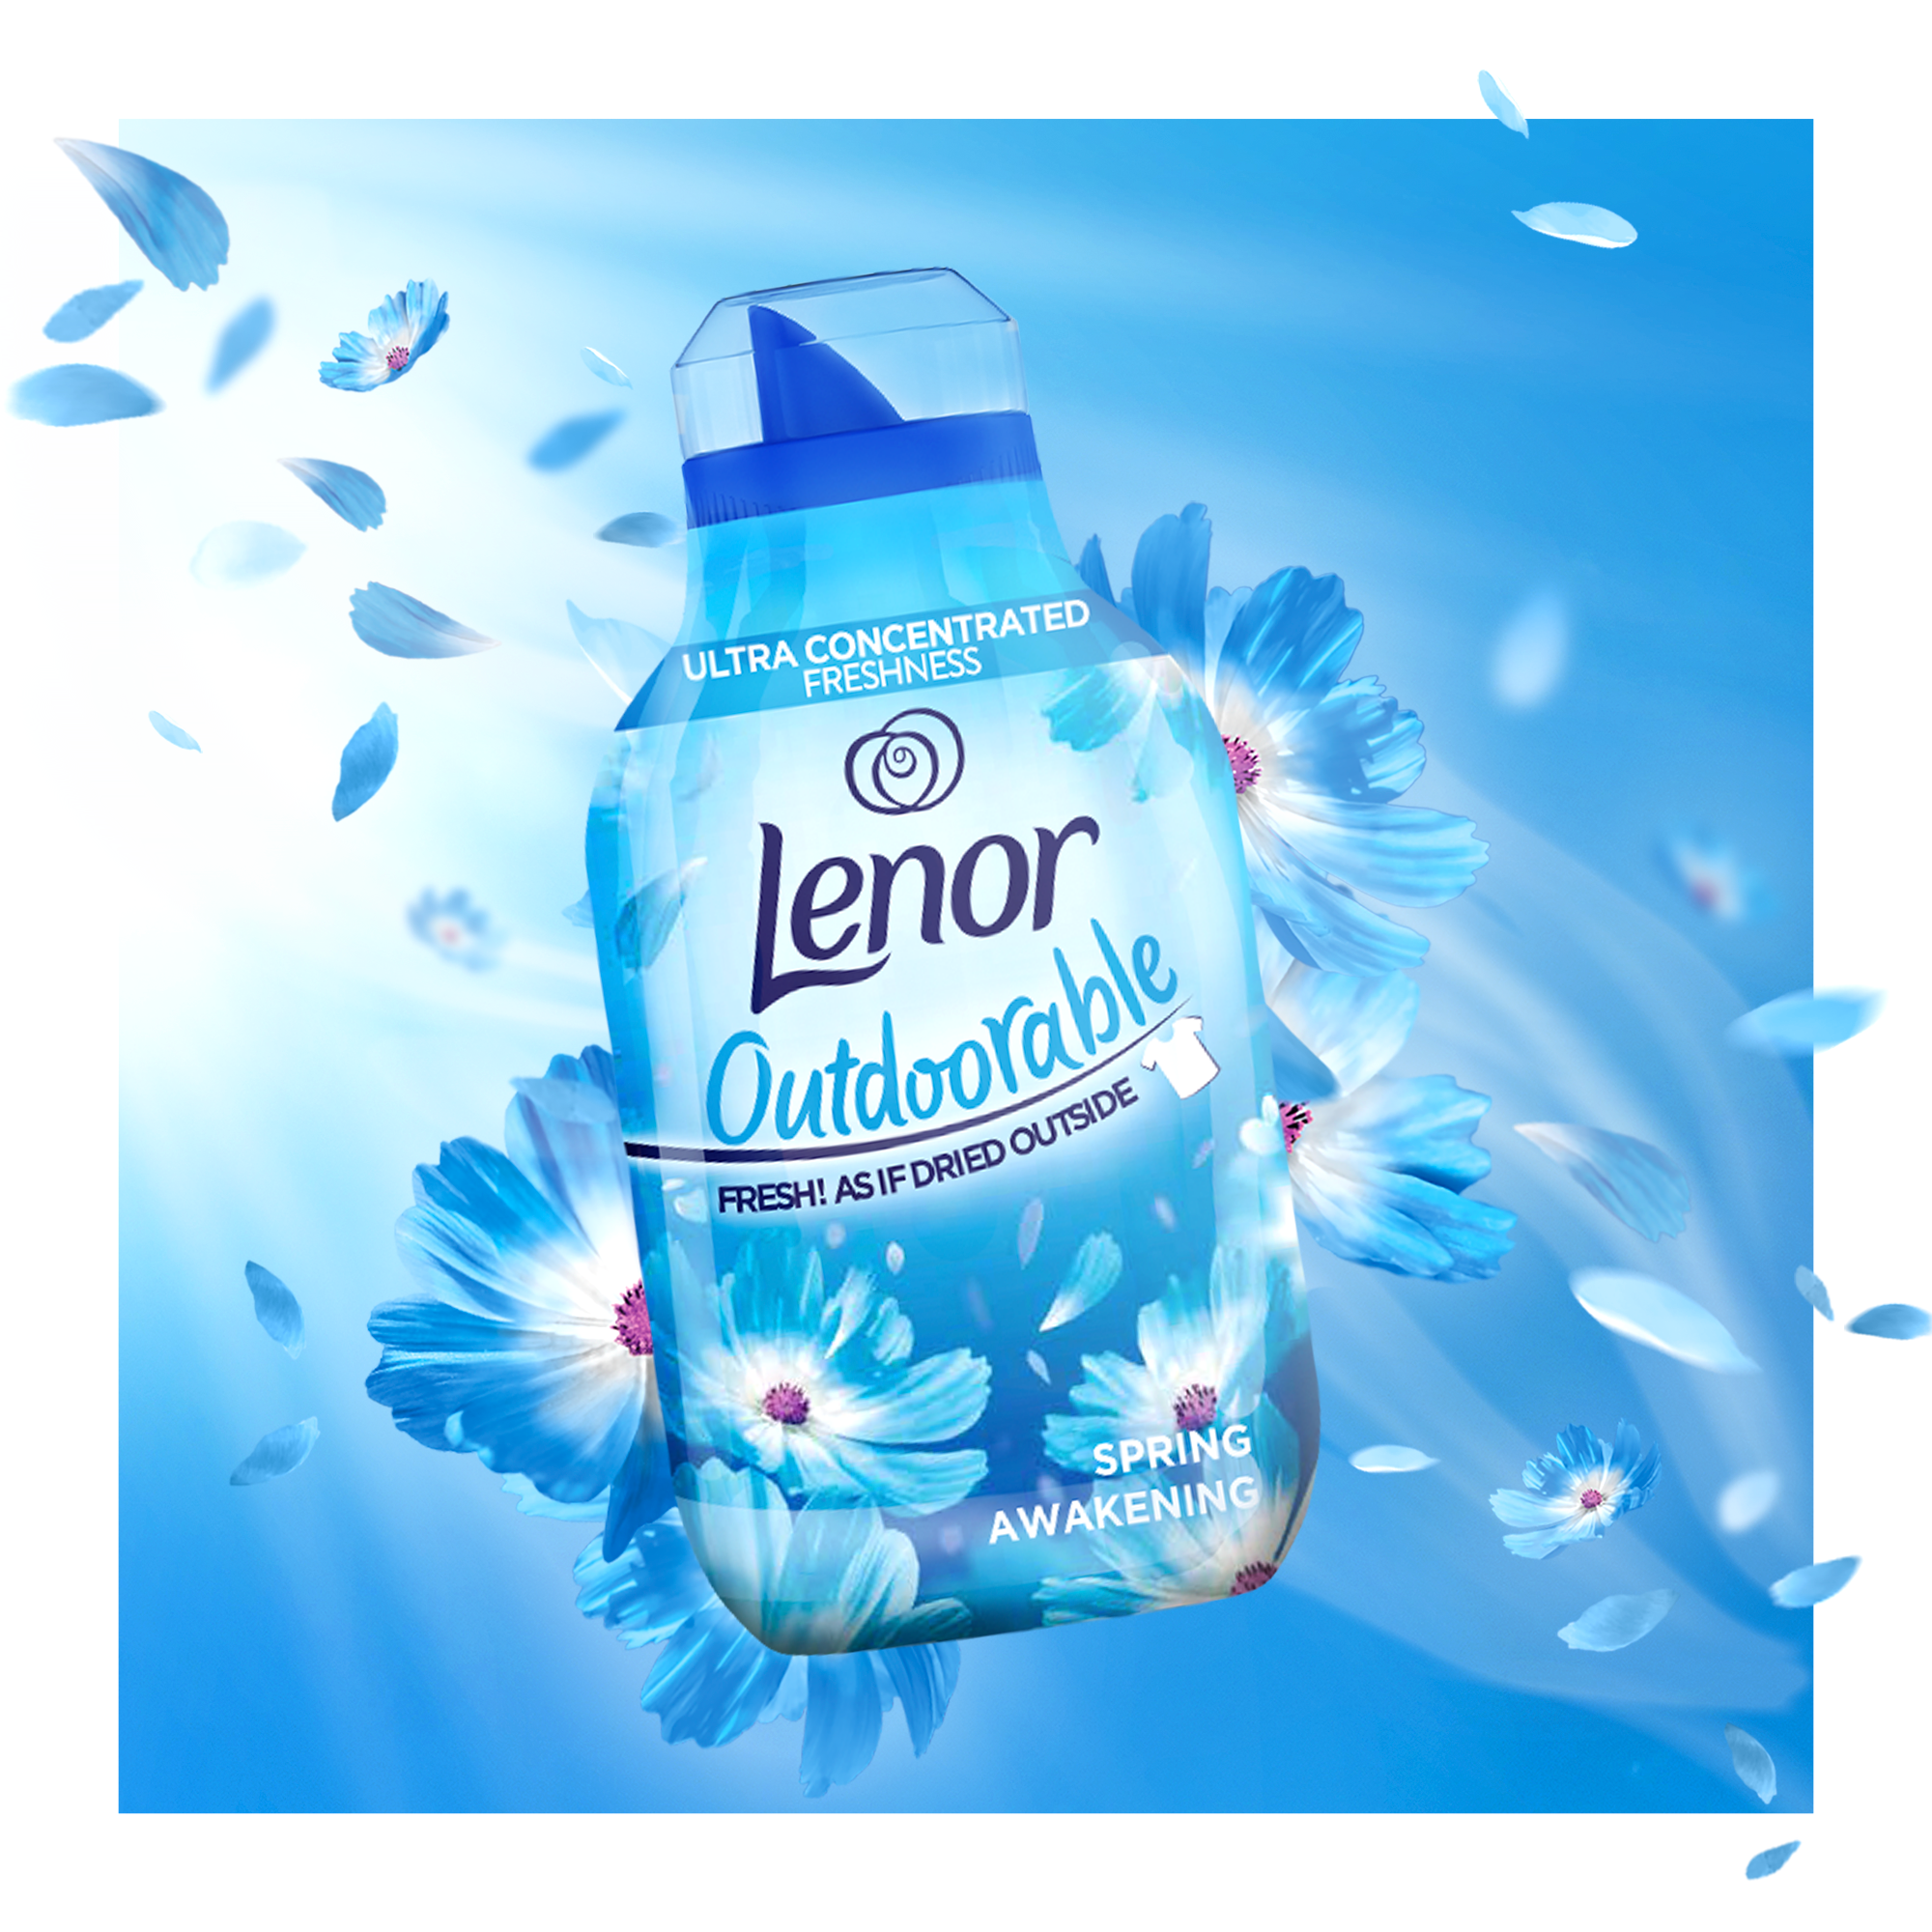 Balsam de rufe LENOR Fresh Air Effect Fresh Wind, 462 ml, 33 spalari